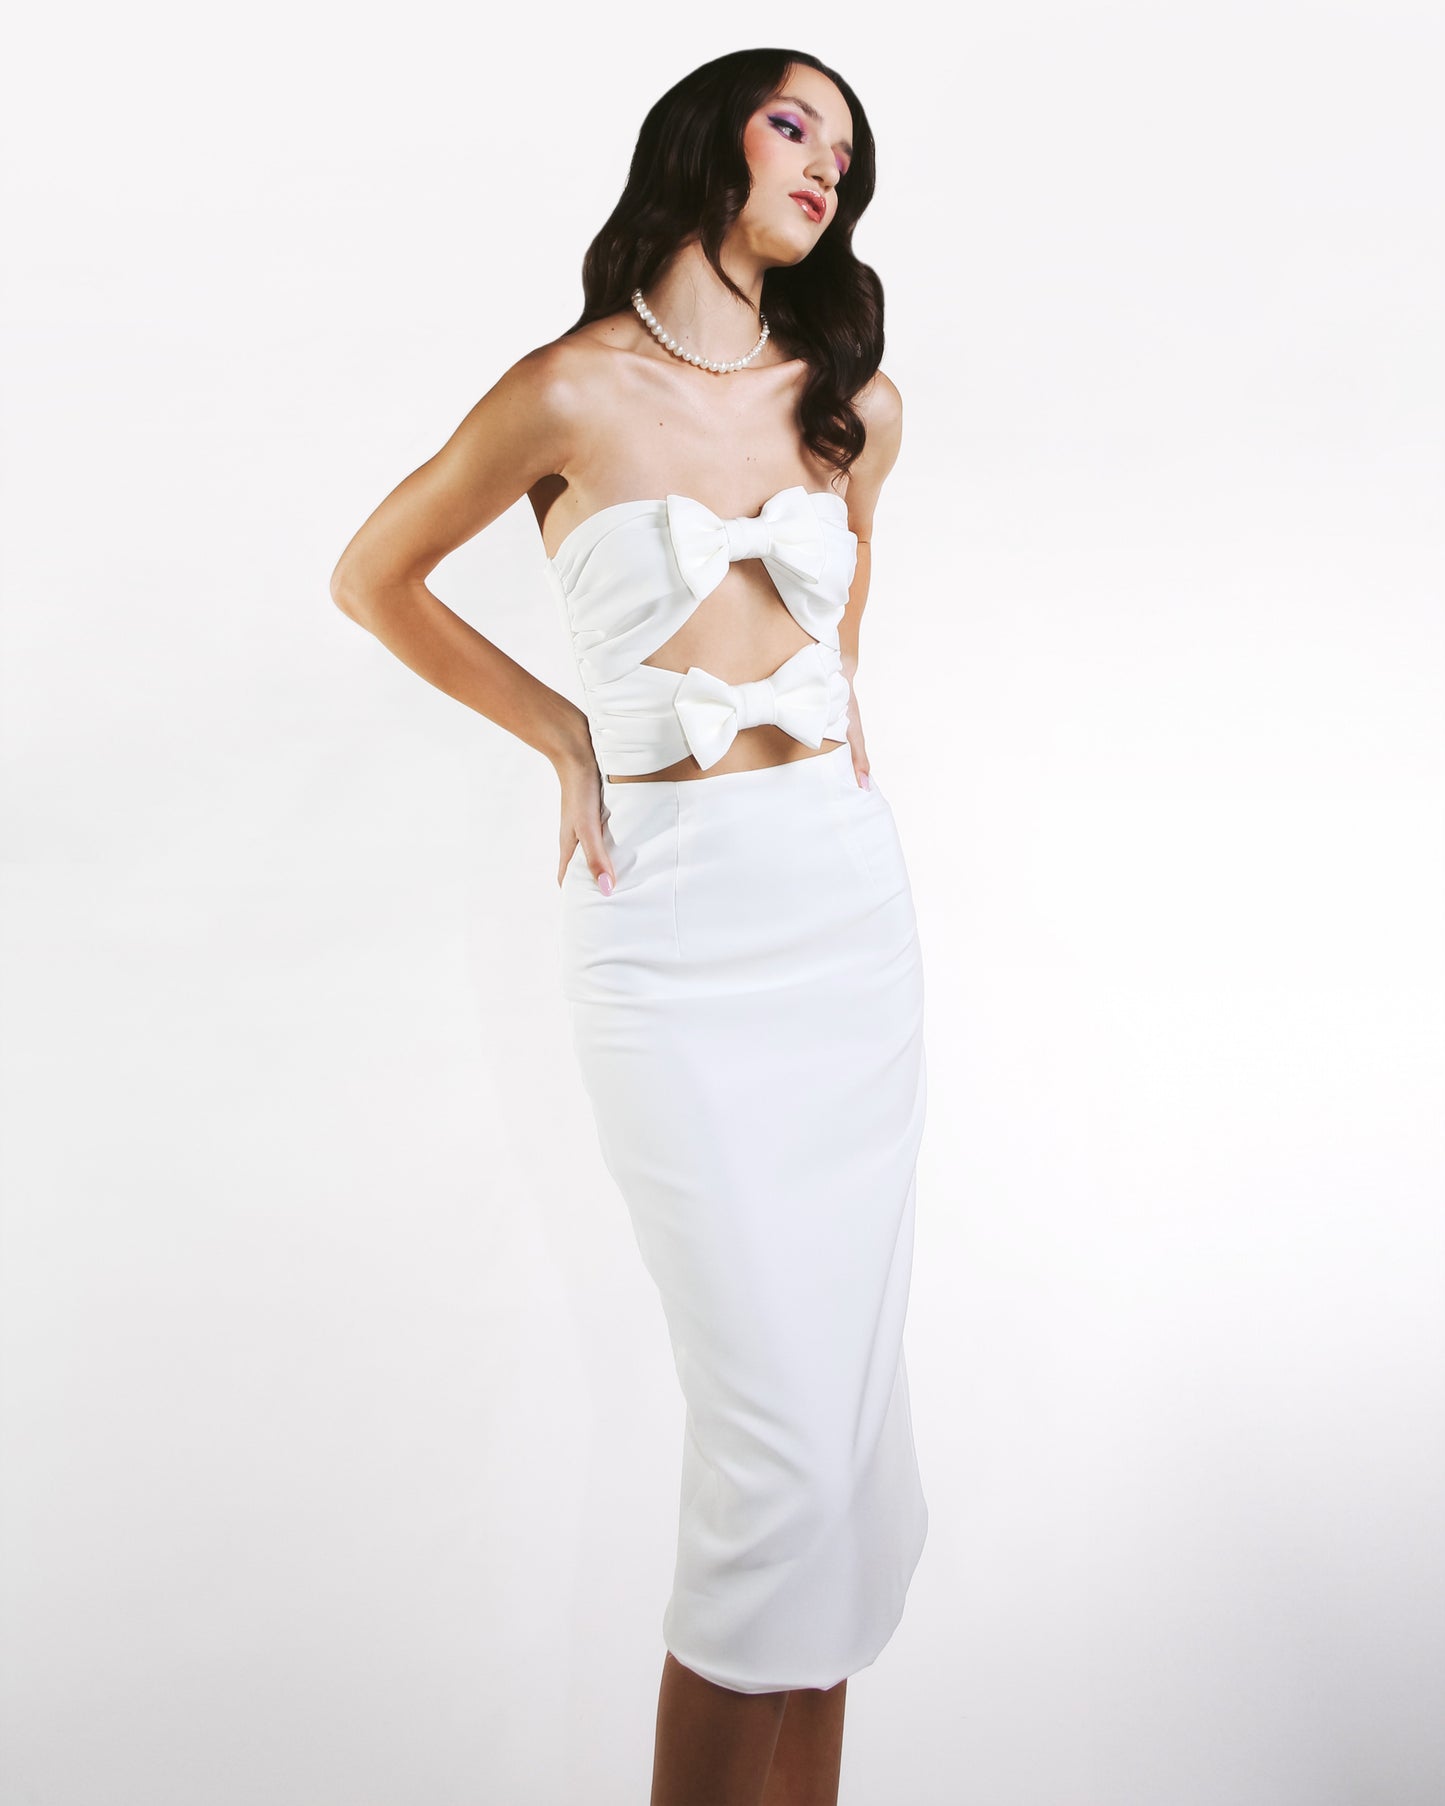 IRA by Irini Charalampous, @irathebrand online shop fashionable ready-to-wear womenswear brand dress PENELOPE colour white high heels Cyprus Greece